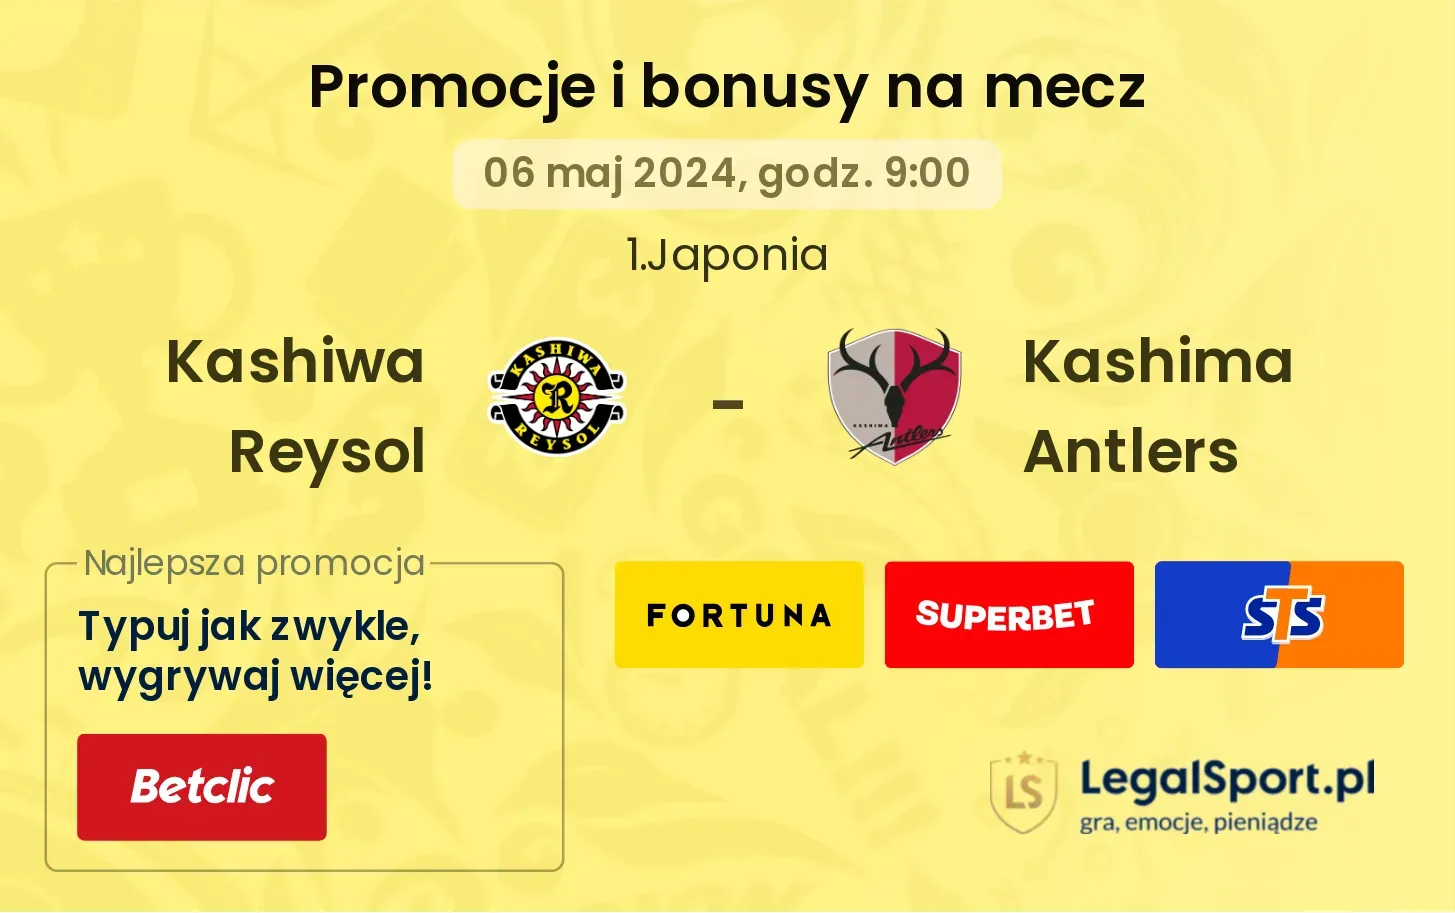 Kashiwa Reysol - Kashima Antlers promocje bonusy na mecz